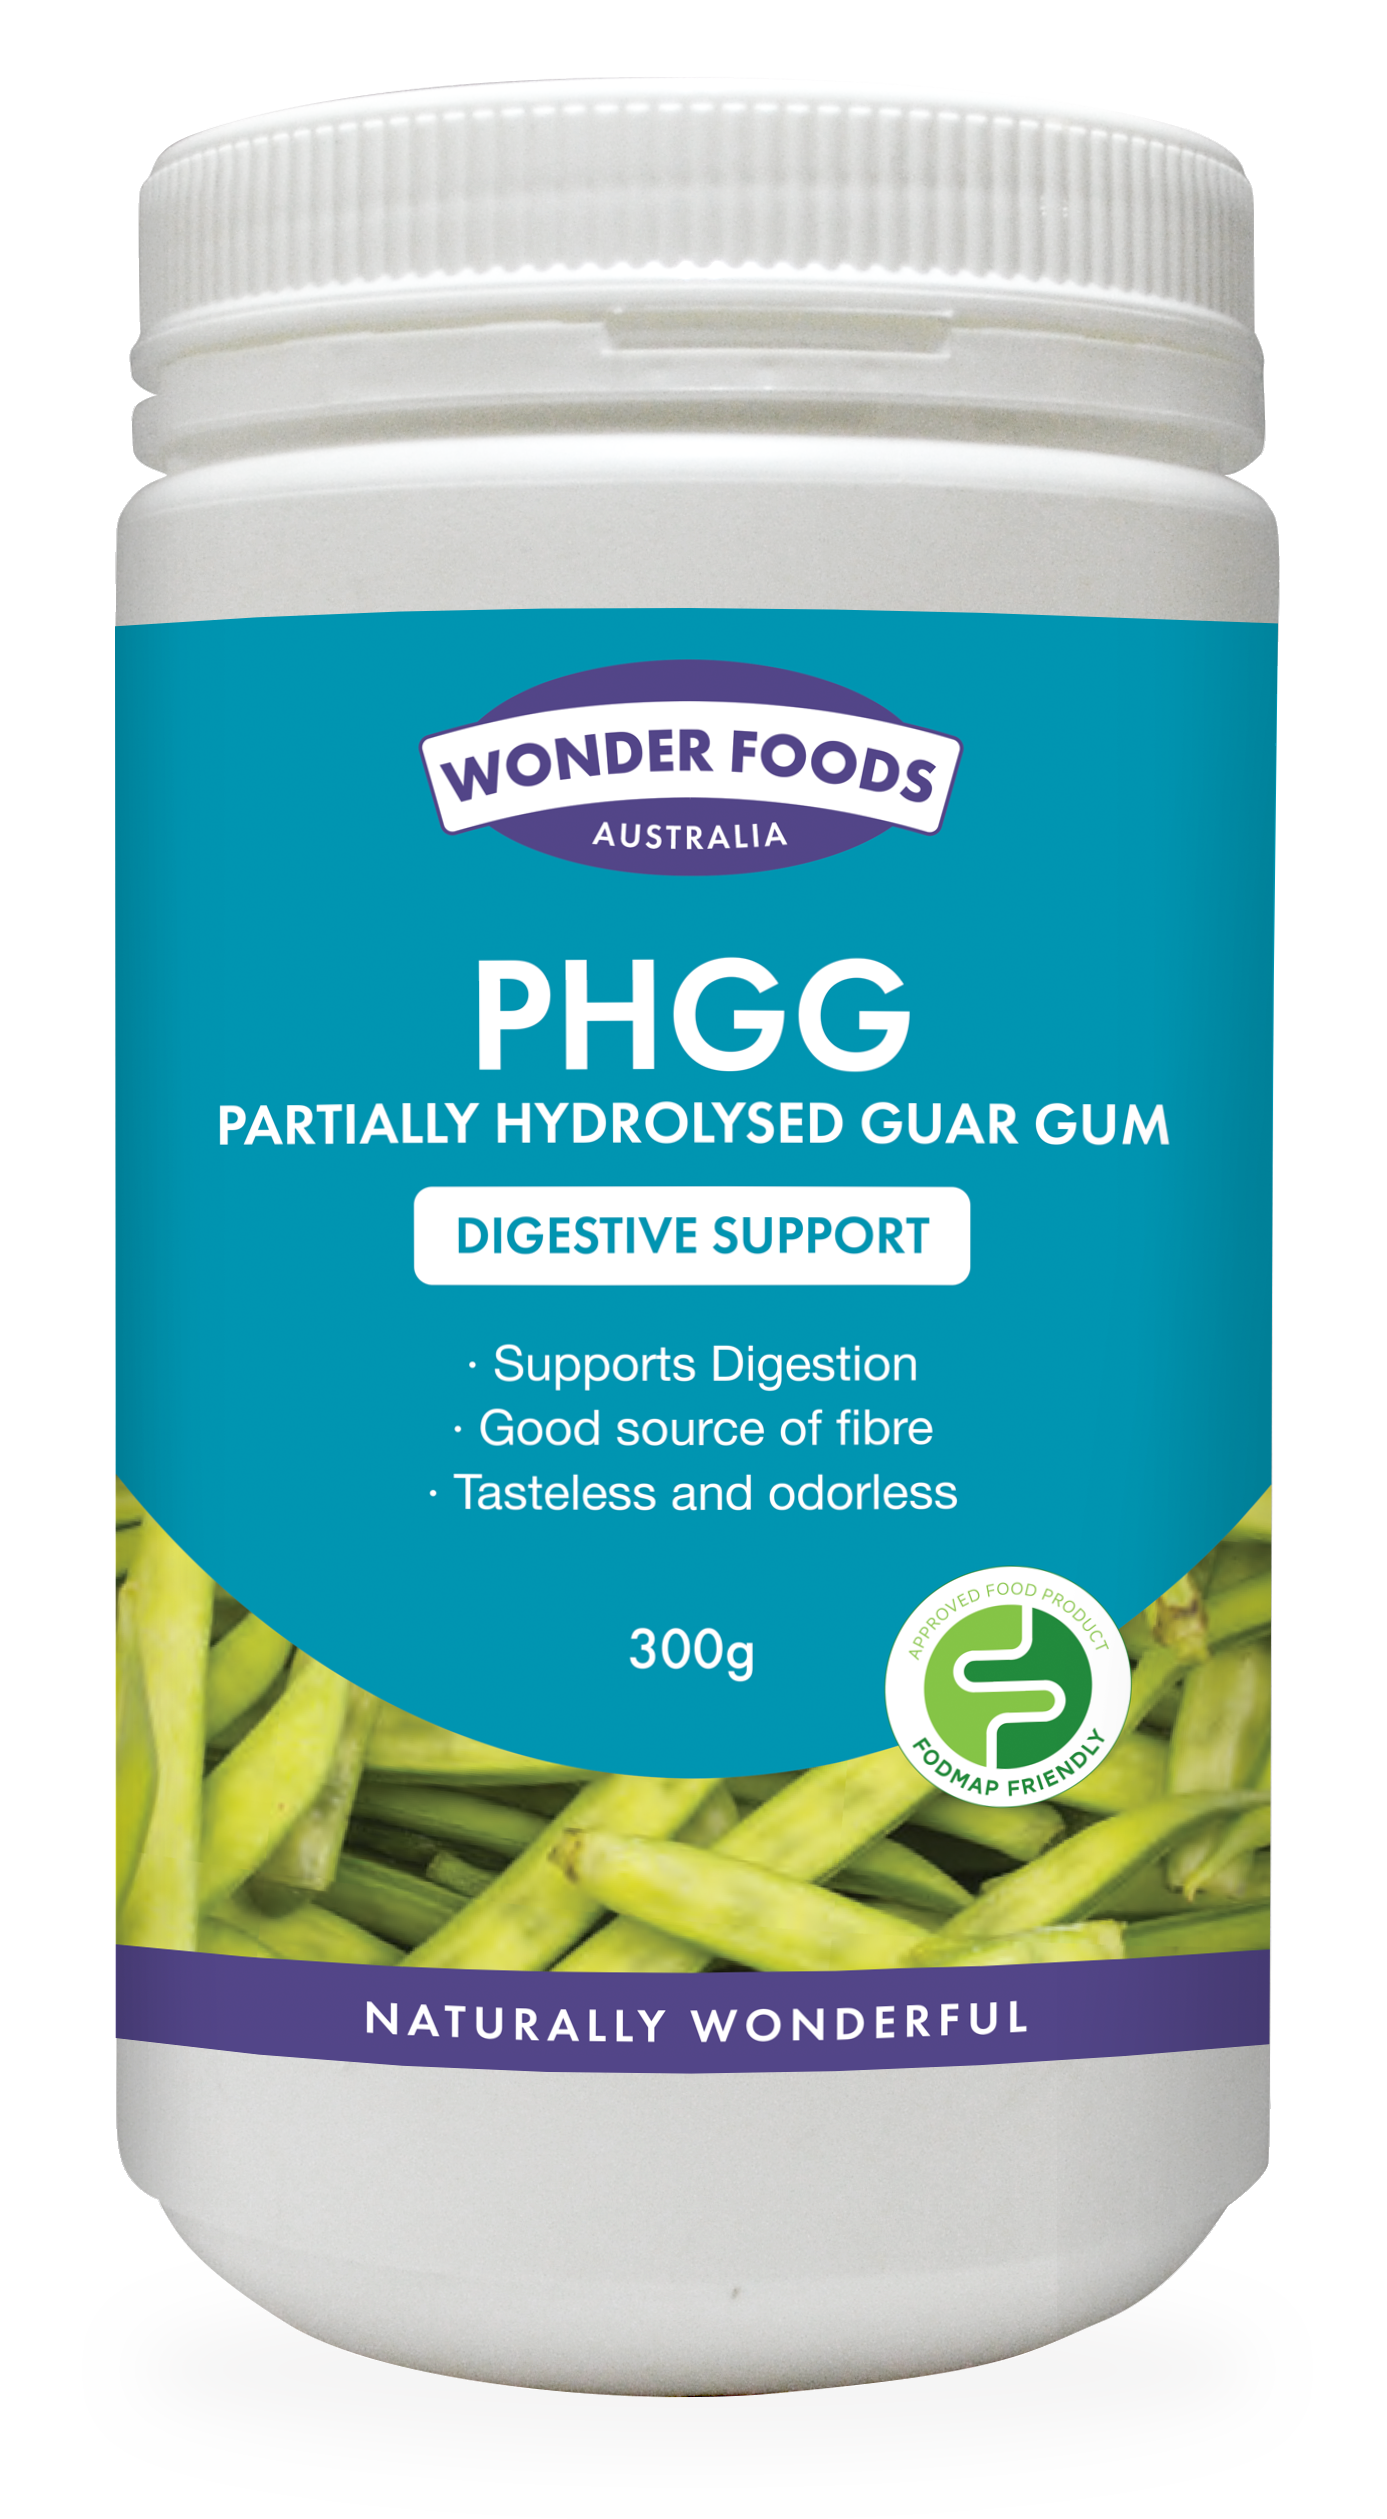 Wonder Foods Australia Partially Hydrolysed Guar Gum - PHGG 300g